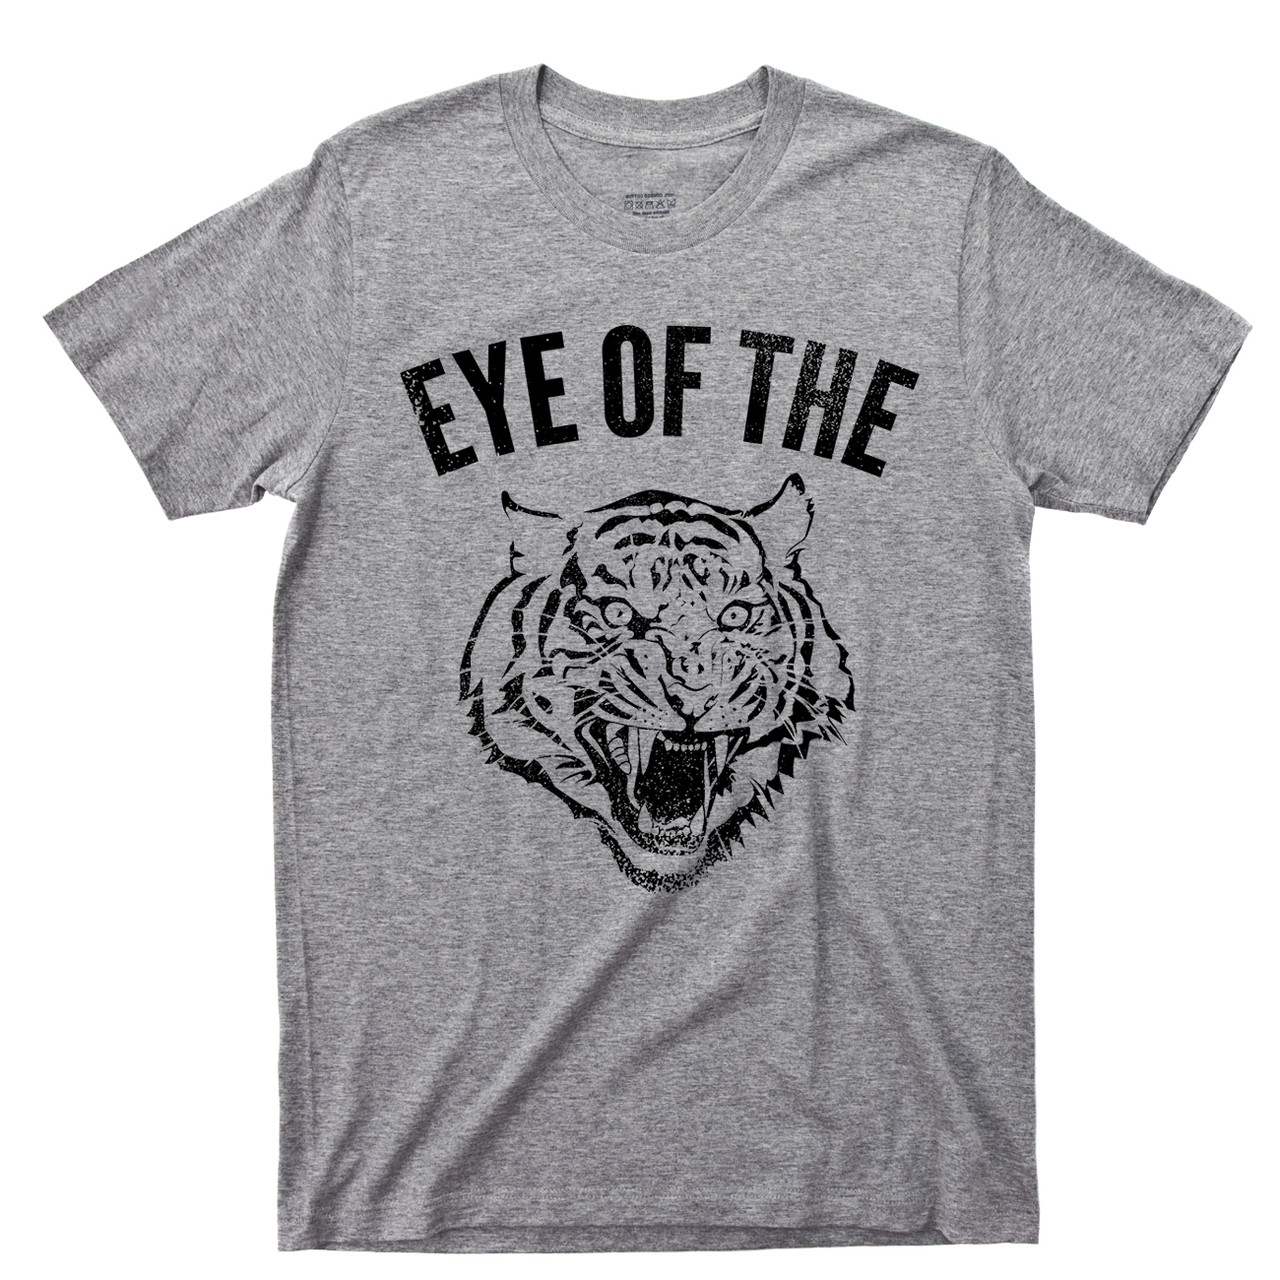 eye of the tiger tee